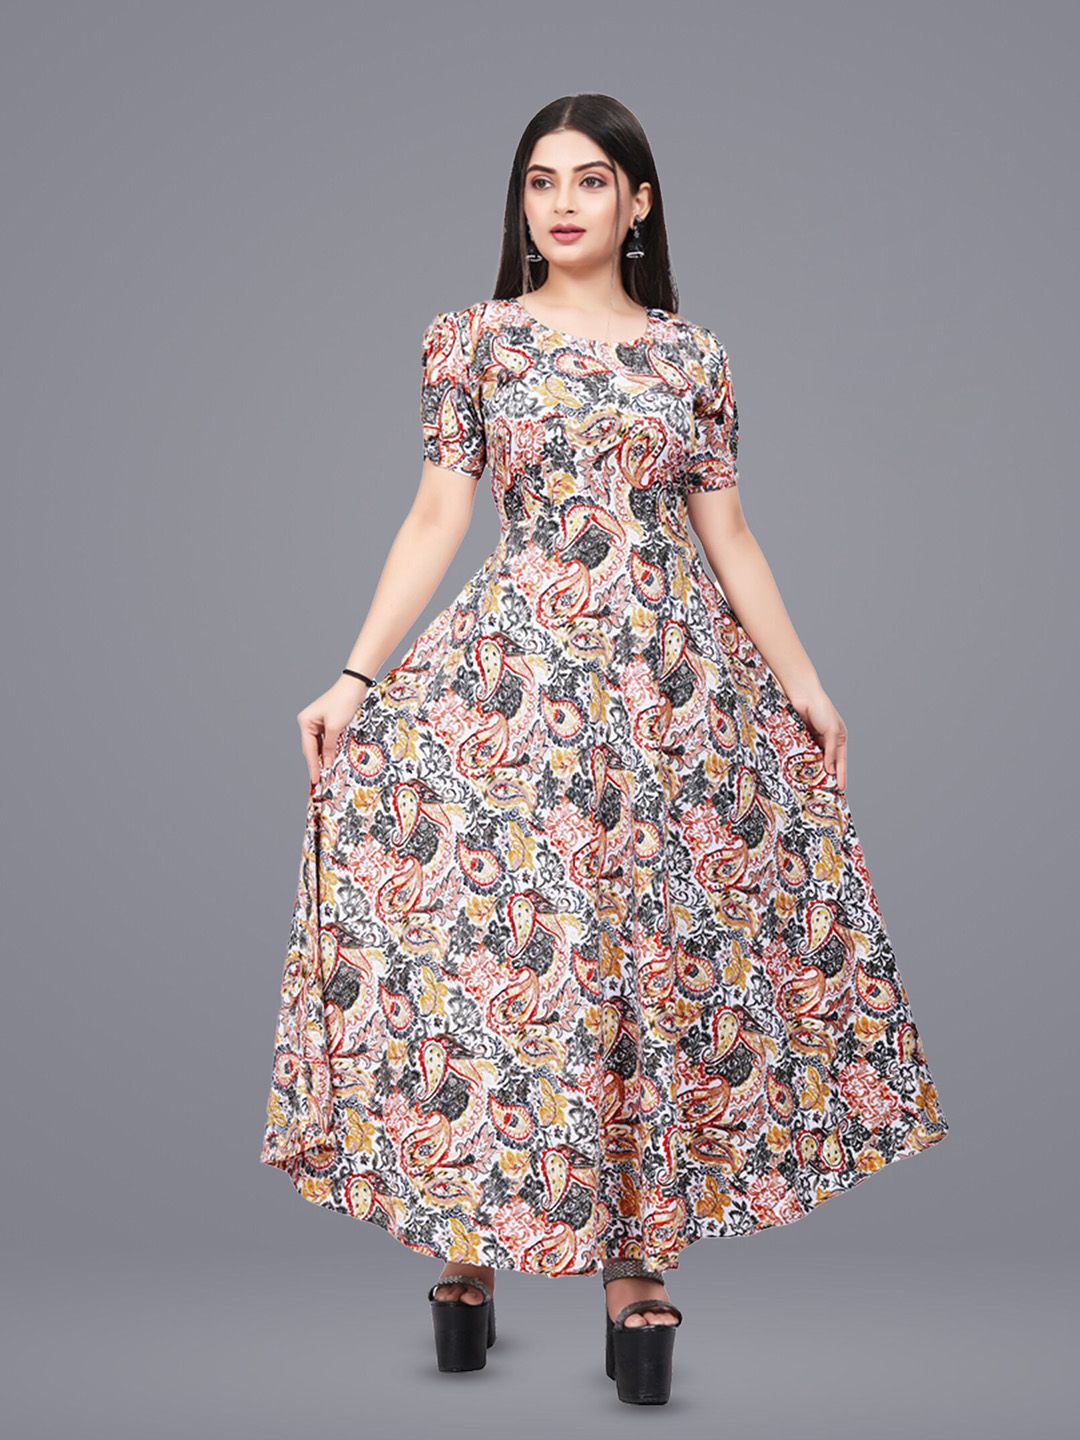 N N ENTERPRISE Floral Printed Puff Sleeves Fit and Flare Dress Price in India